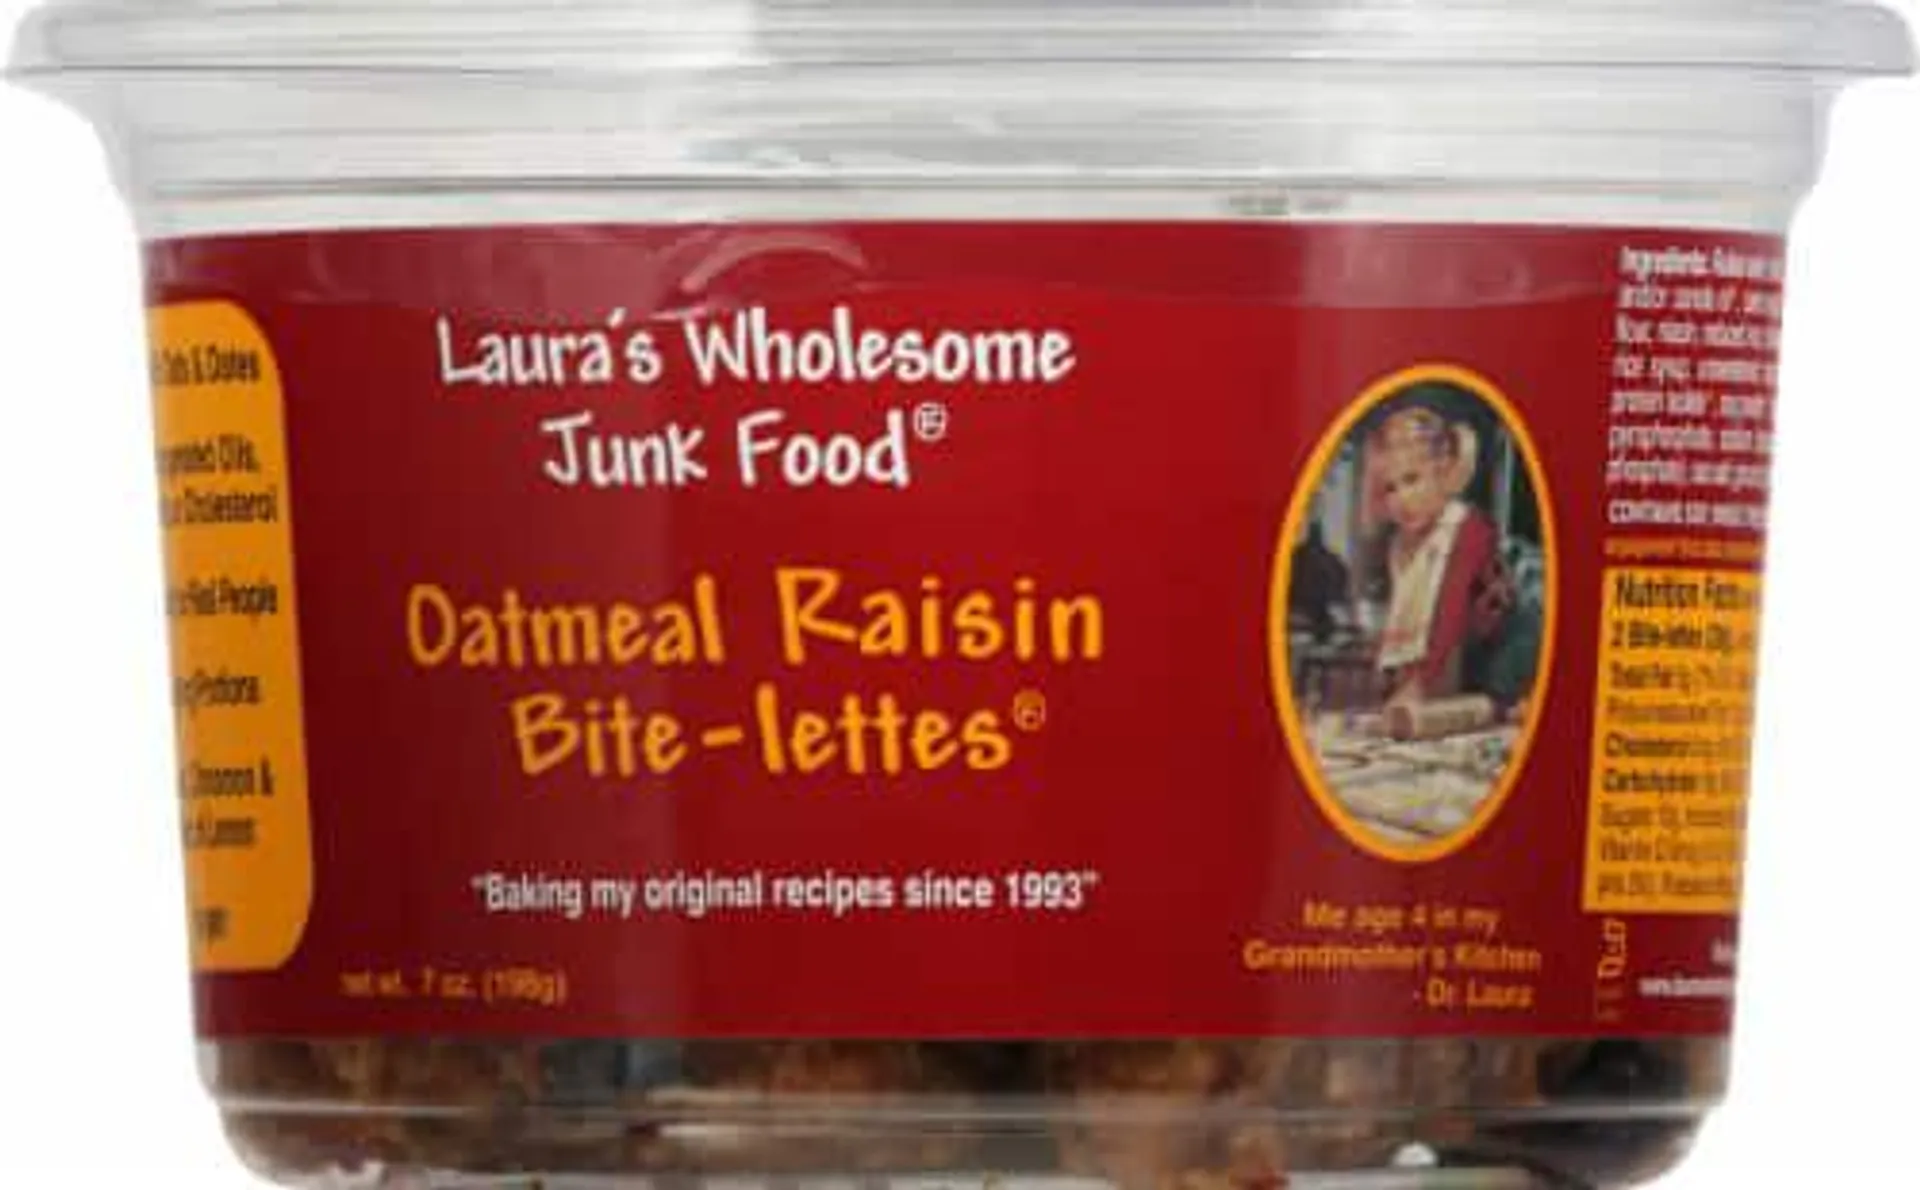 Laura's Wholesome Junk Food® Oatmeal Raisin Bite-lettes